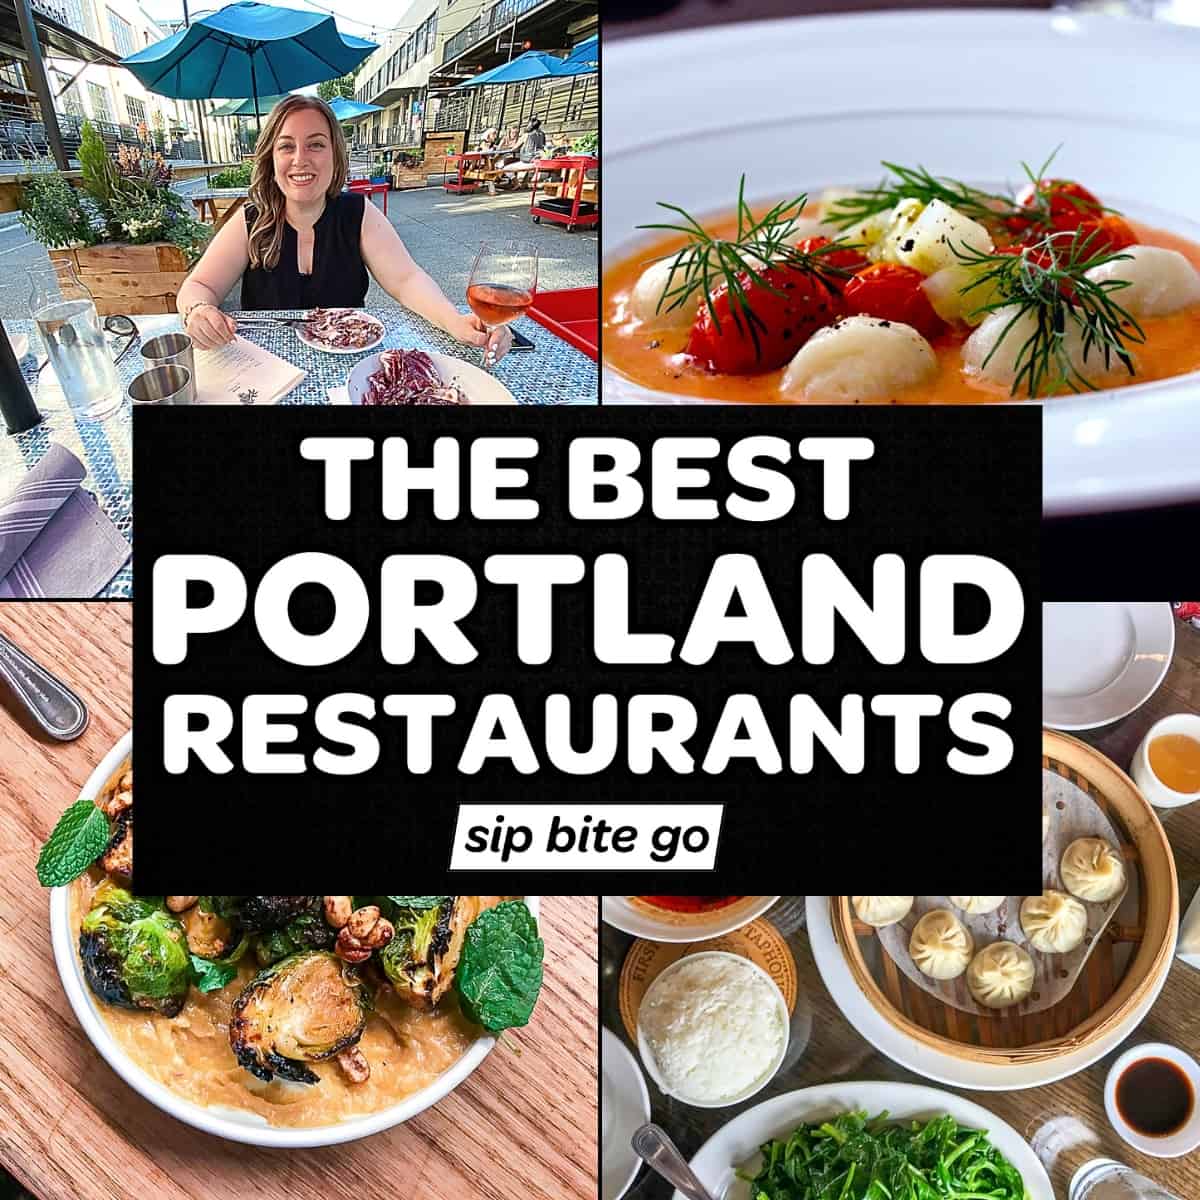 Best Portland Oregon Restaurants Sip Bite Go photos with text overal